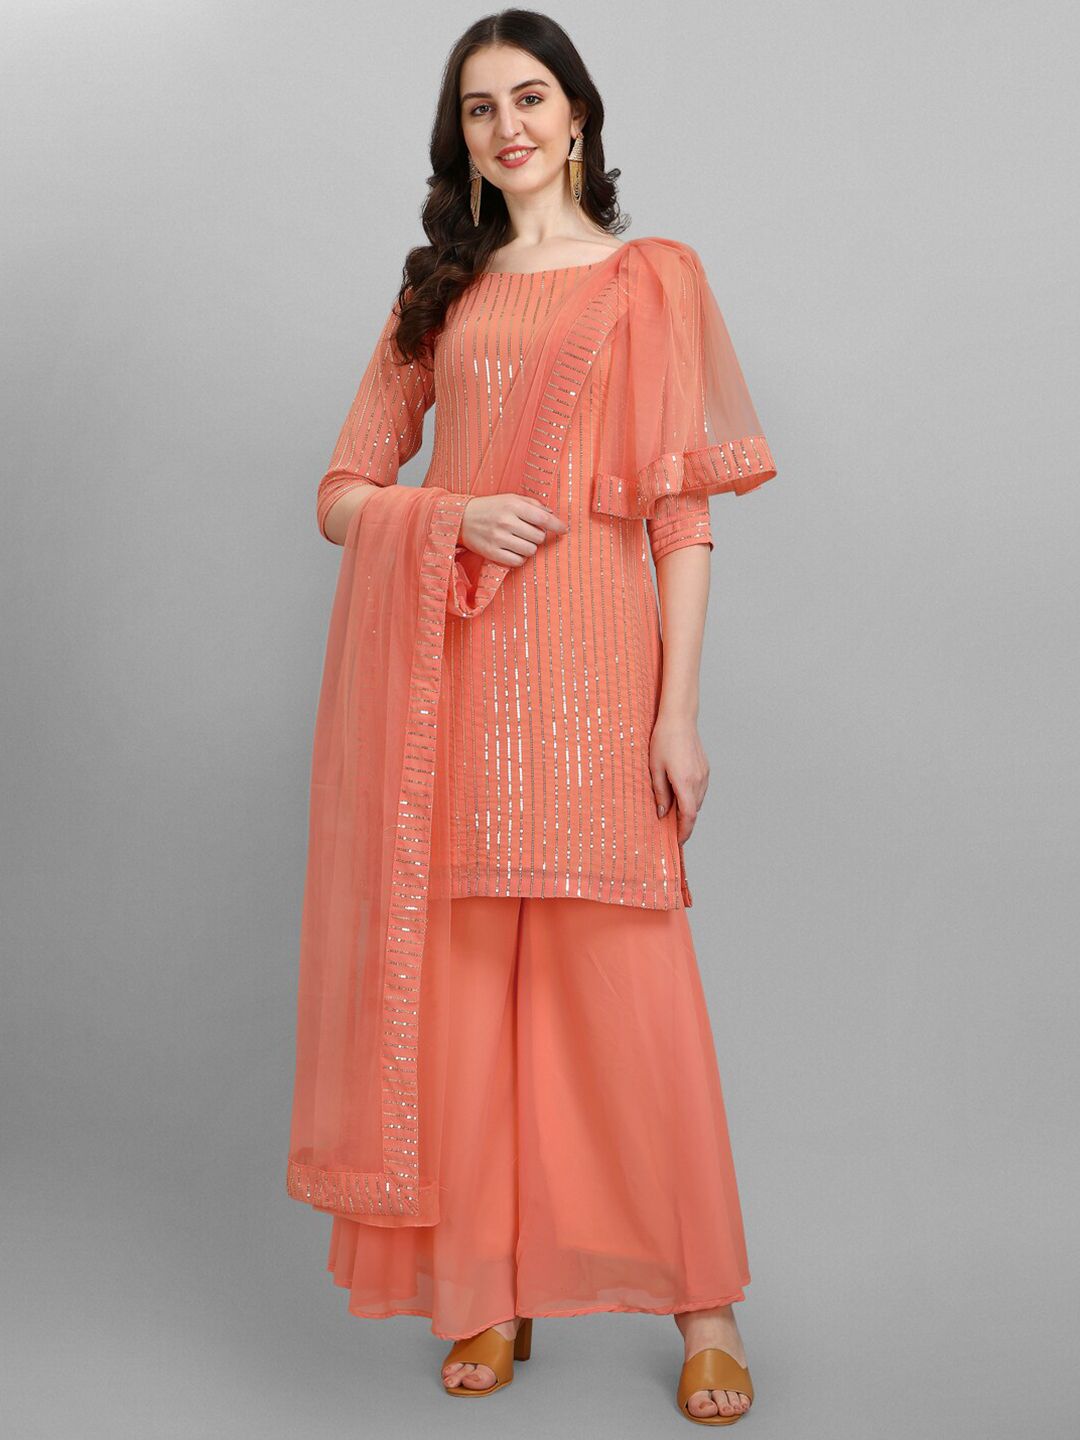 JATRIQQ Peach-Coloured & Gold-Toned Embellished Semi-Stitched Dress Material Price in India